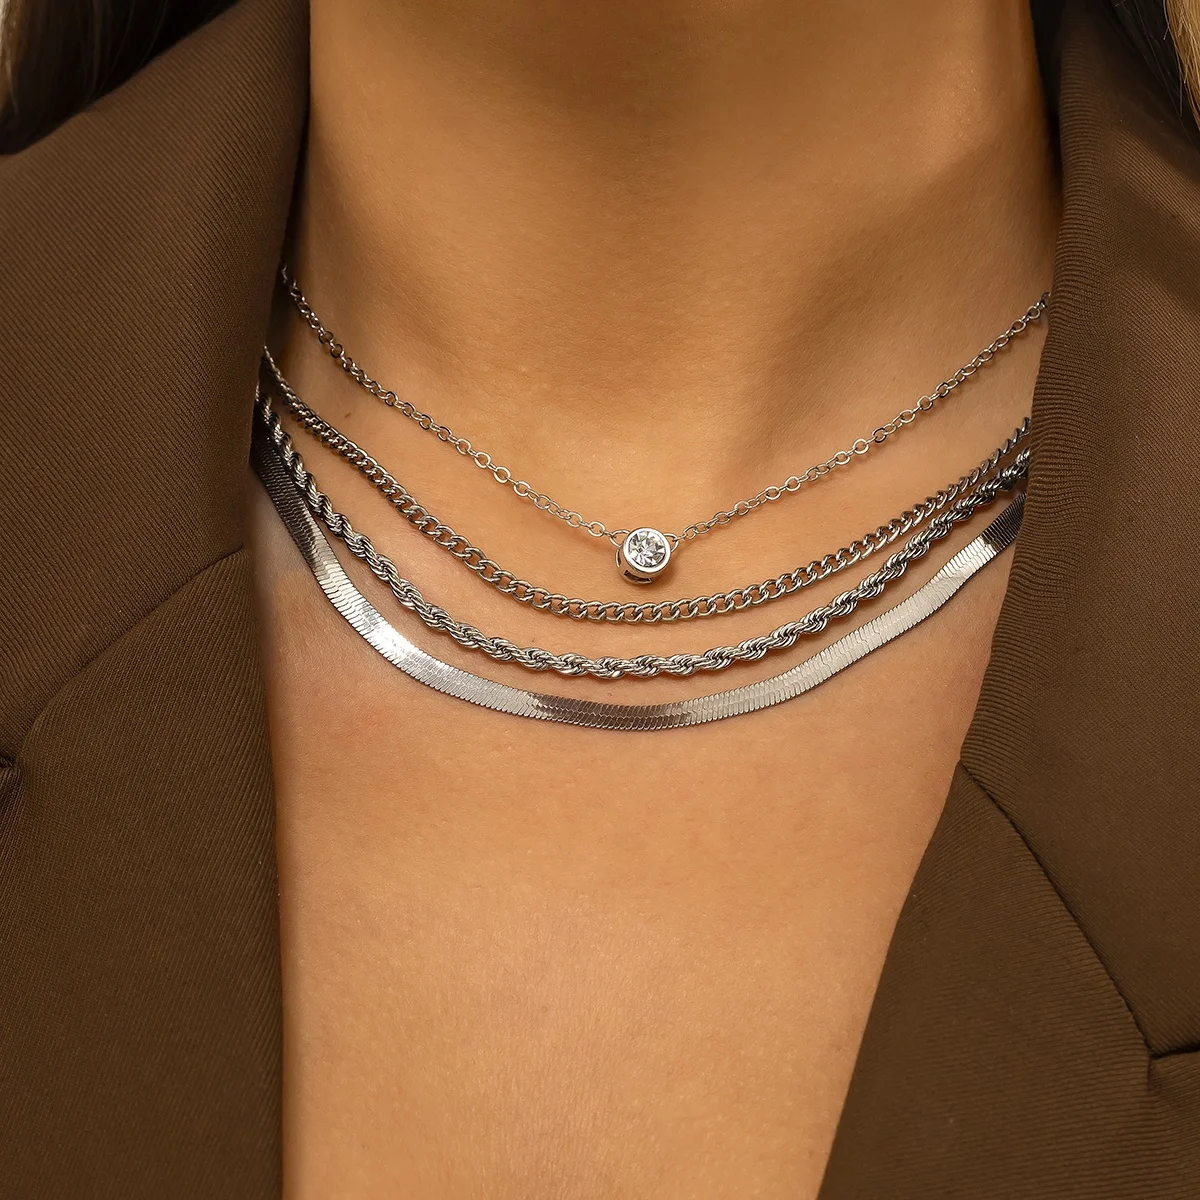 

SHIXIN Hot Sale 4 Multi Layered Shiny Rhinestone Pendant Necklace Jewelry for Women Fashion Twist Snake Chain Necklace